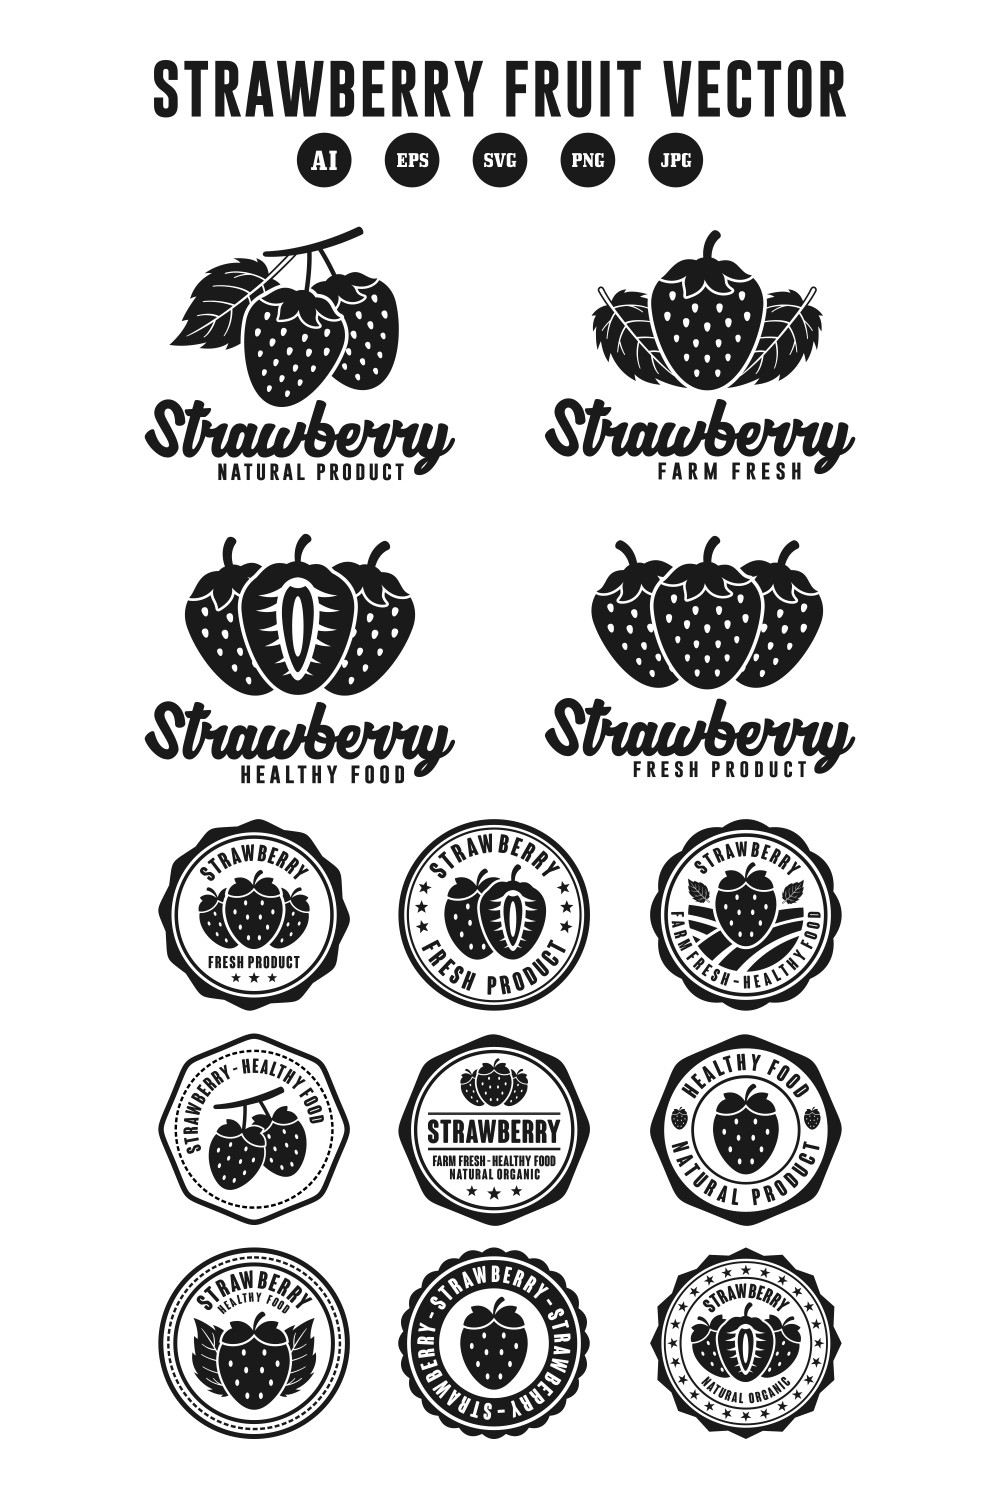 Set Strawberry fruit vector stamps logo design - $6 pinterest preview image.